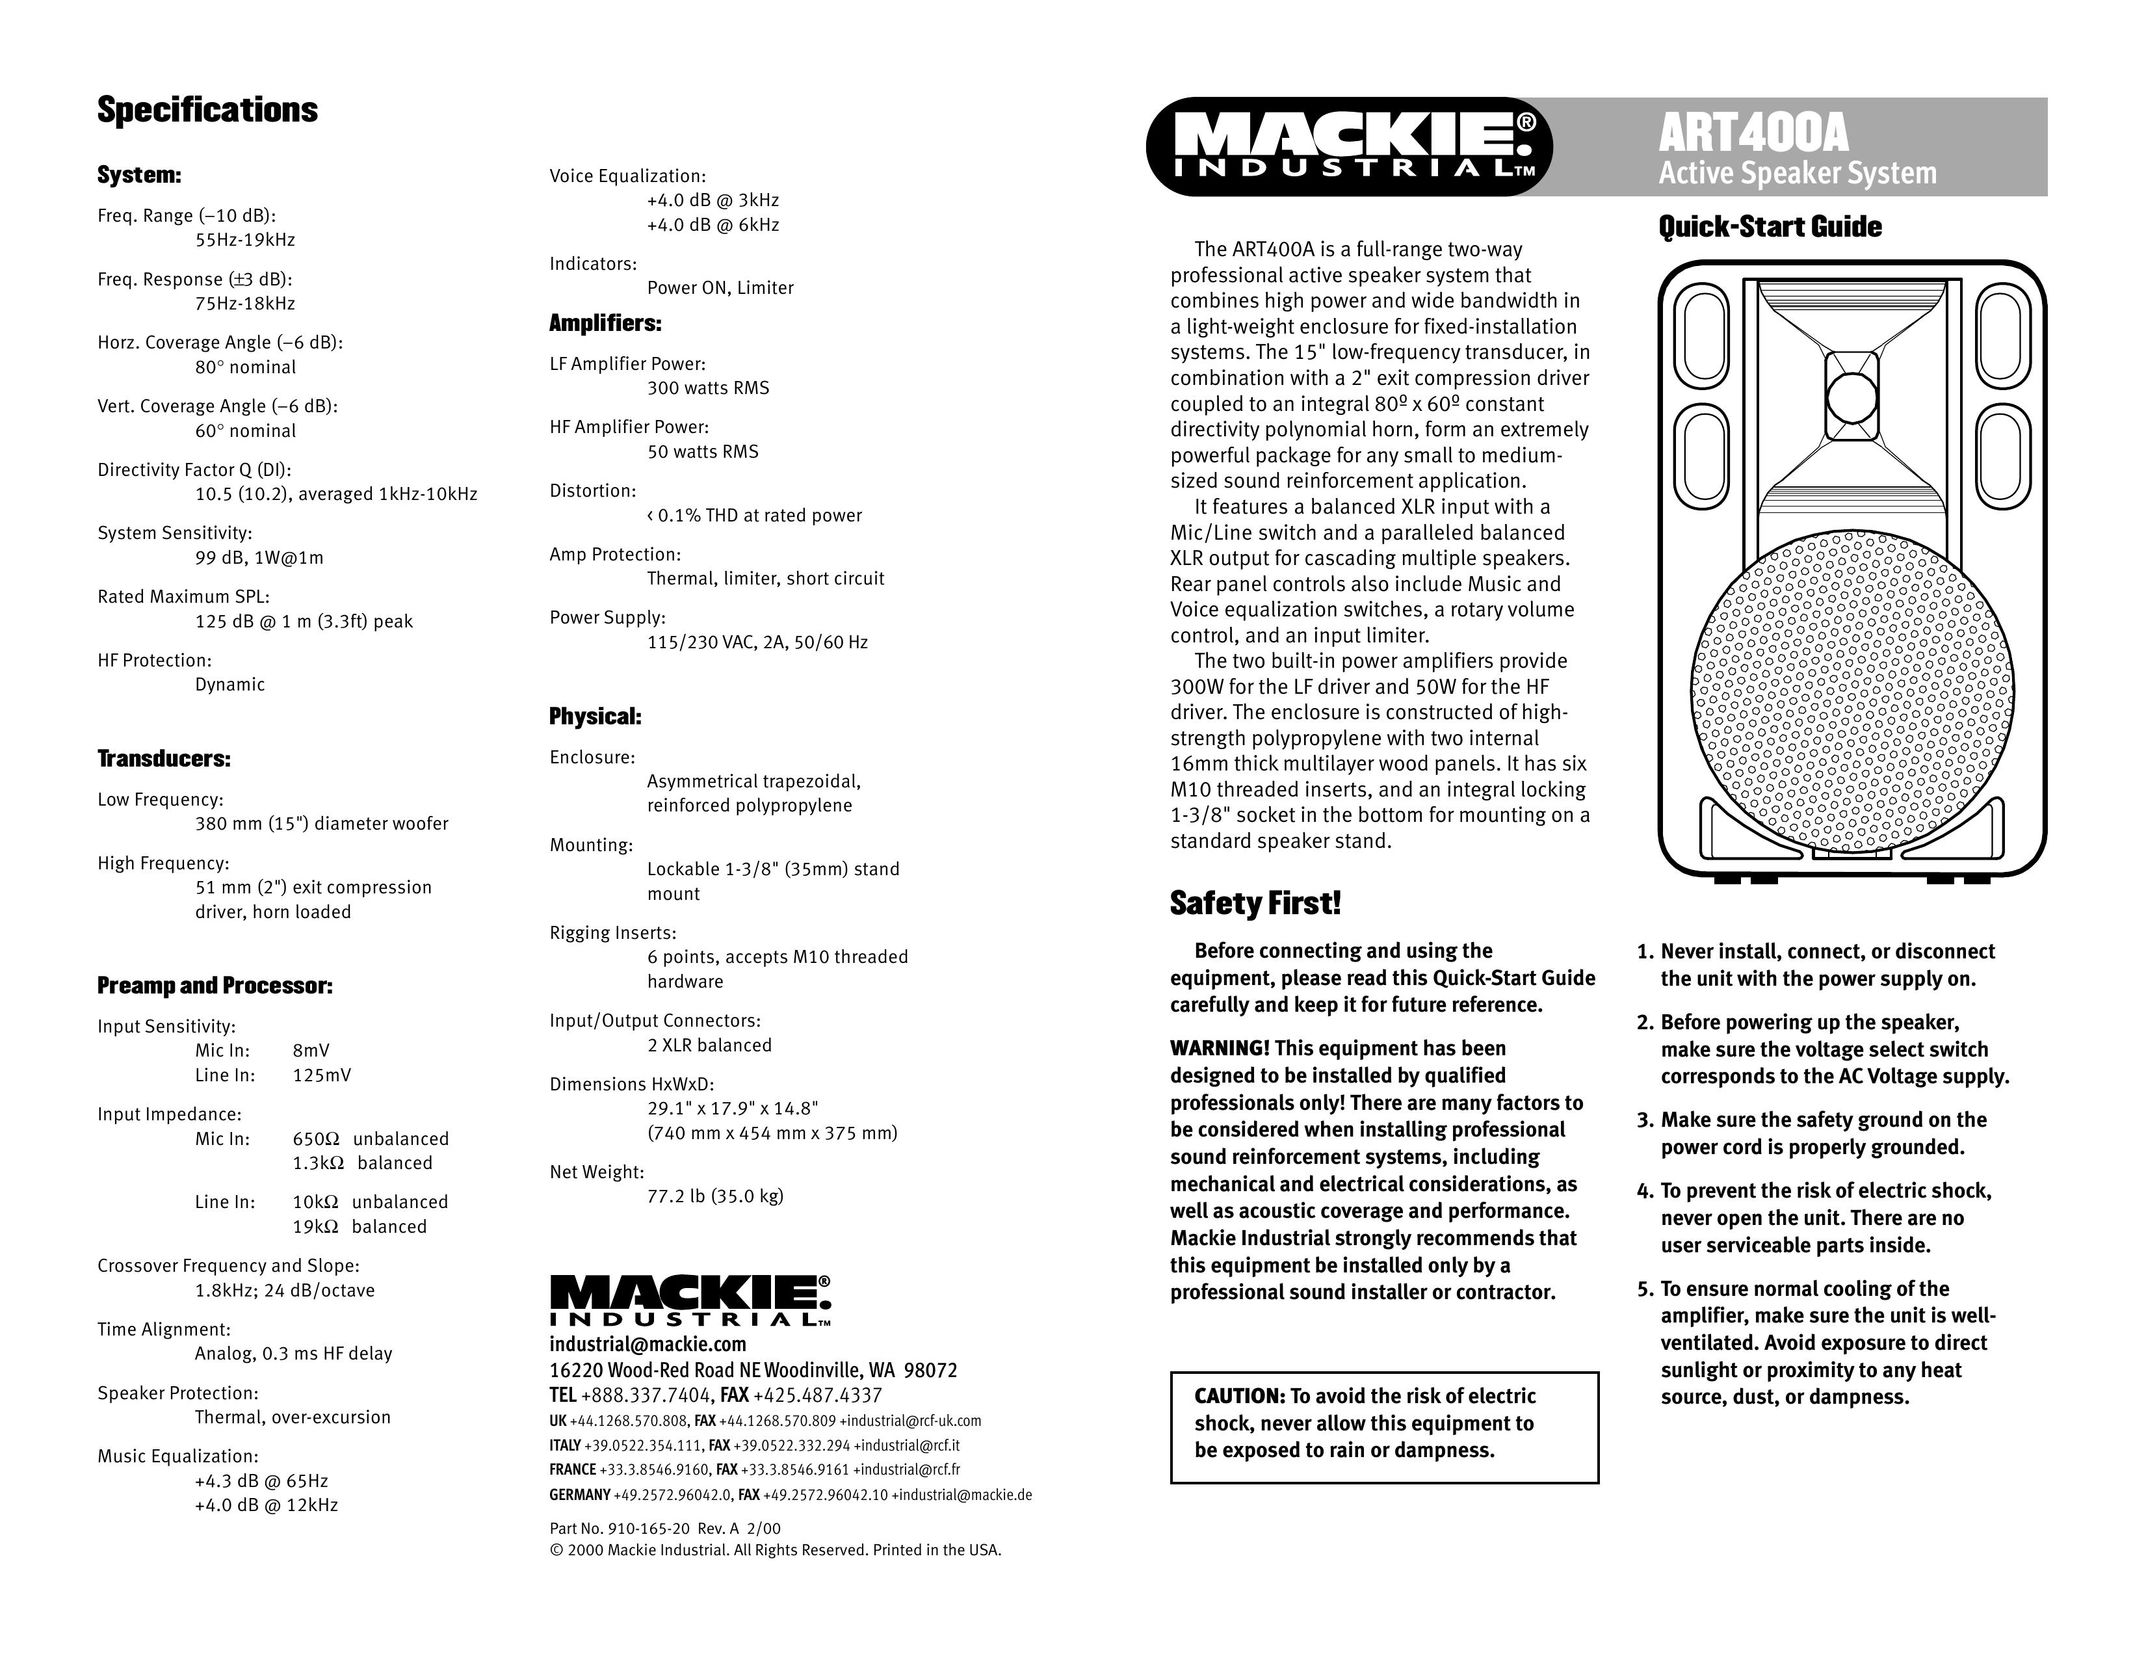 Mackie ART400A Portable Speaker User Manual